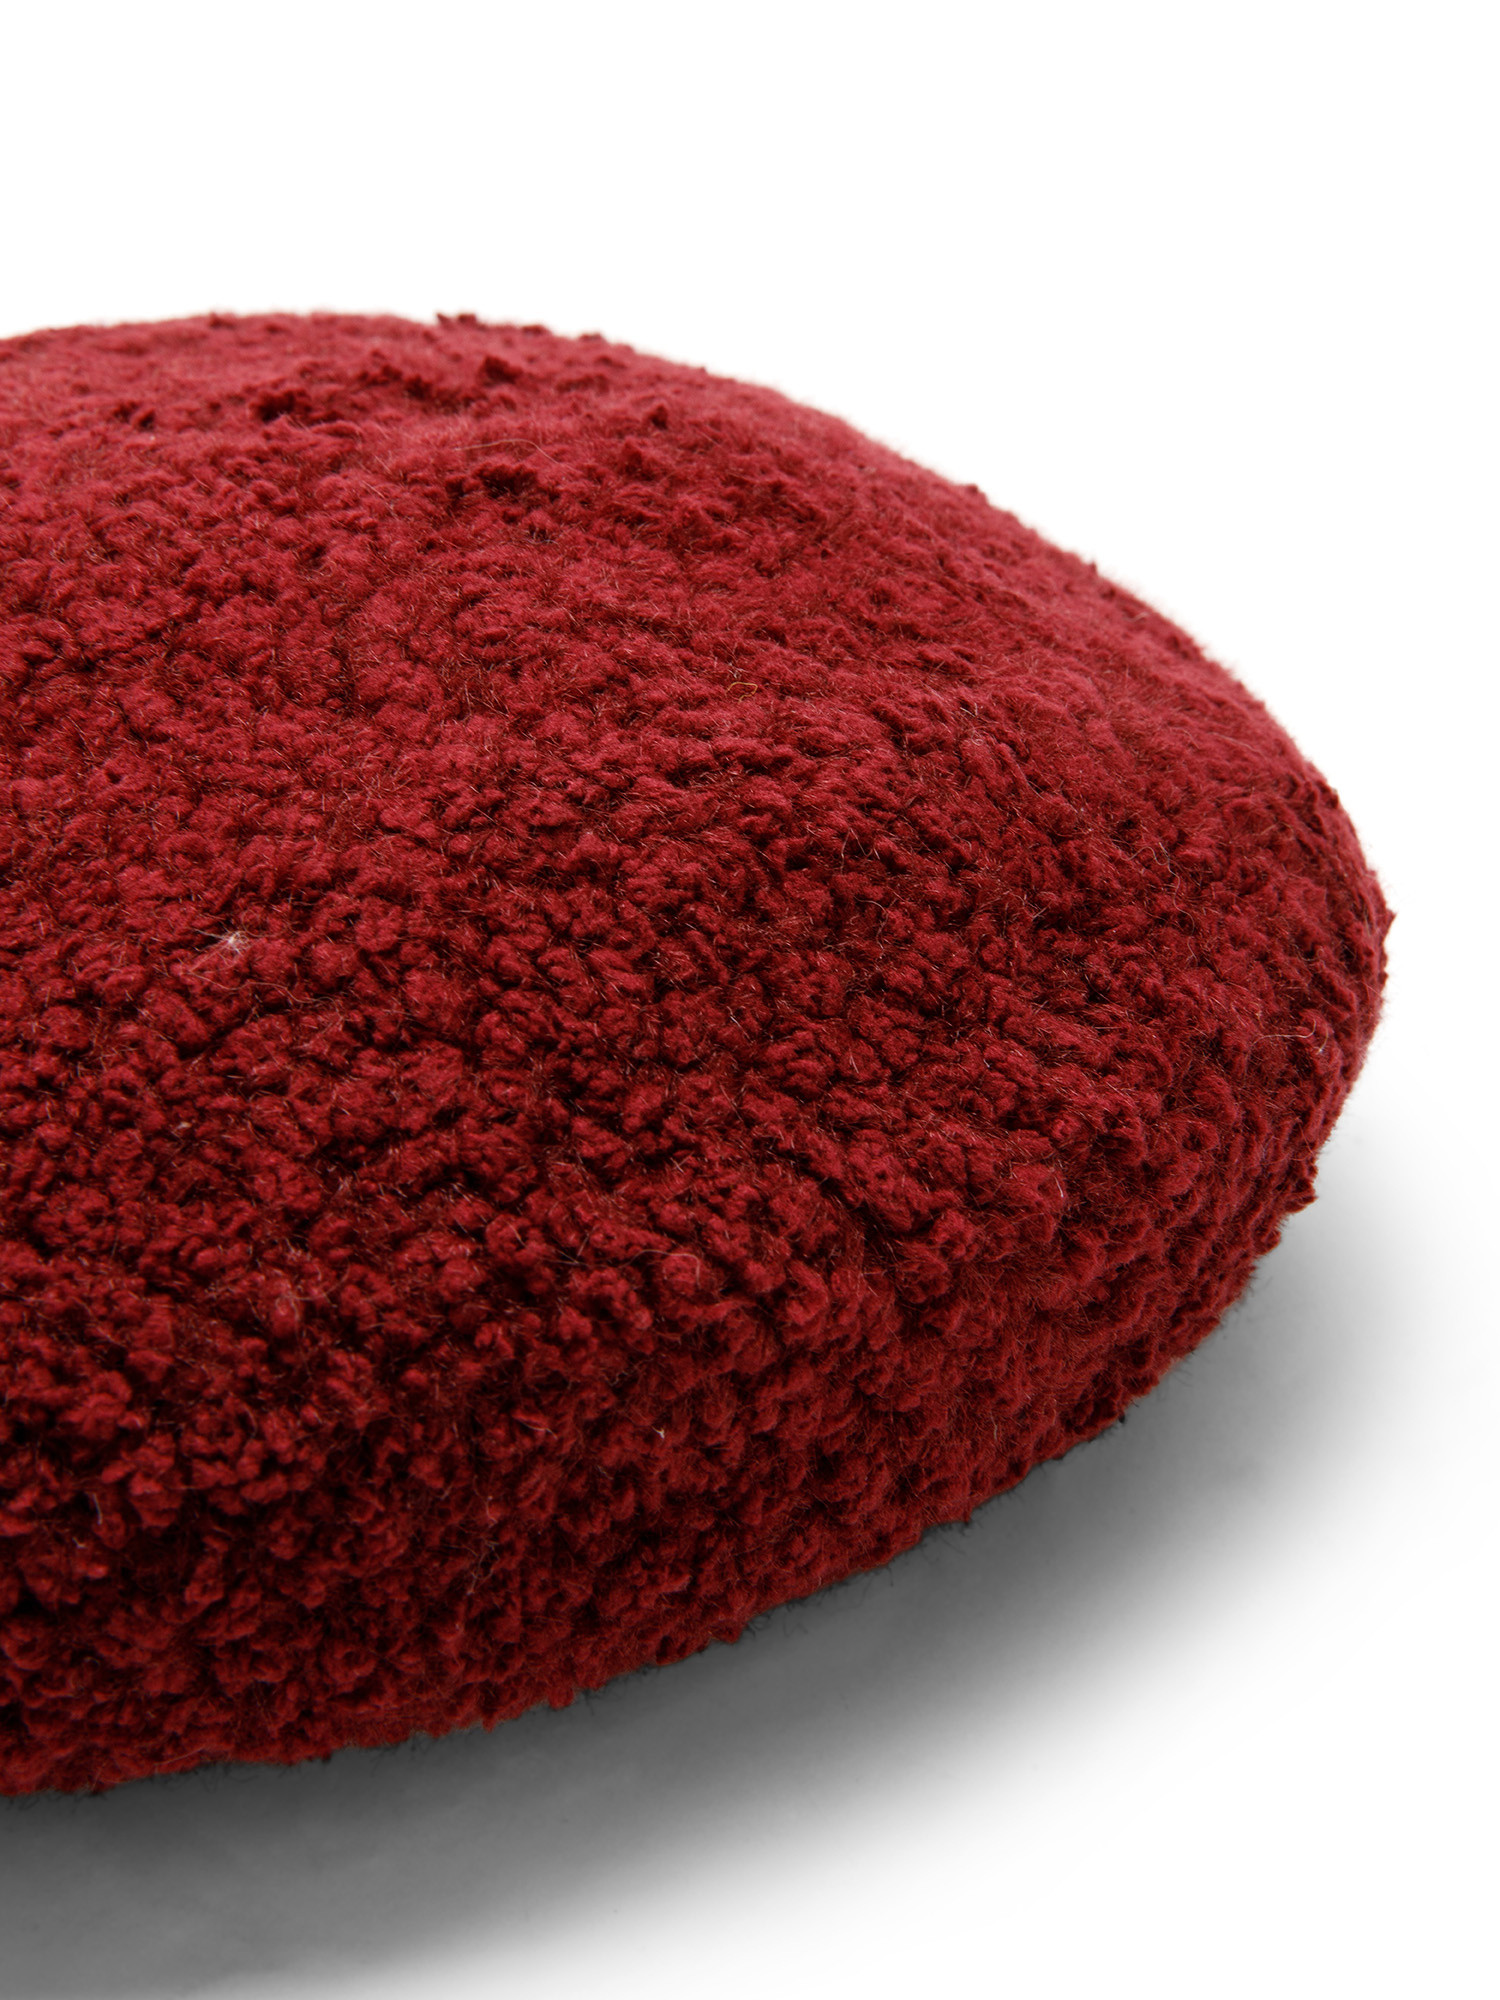 Koan - Fur effect beret, Dark Red, large image number 1